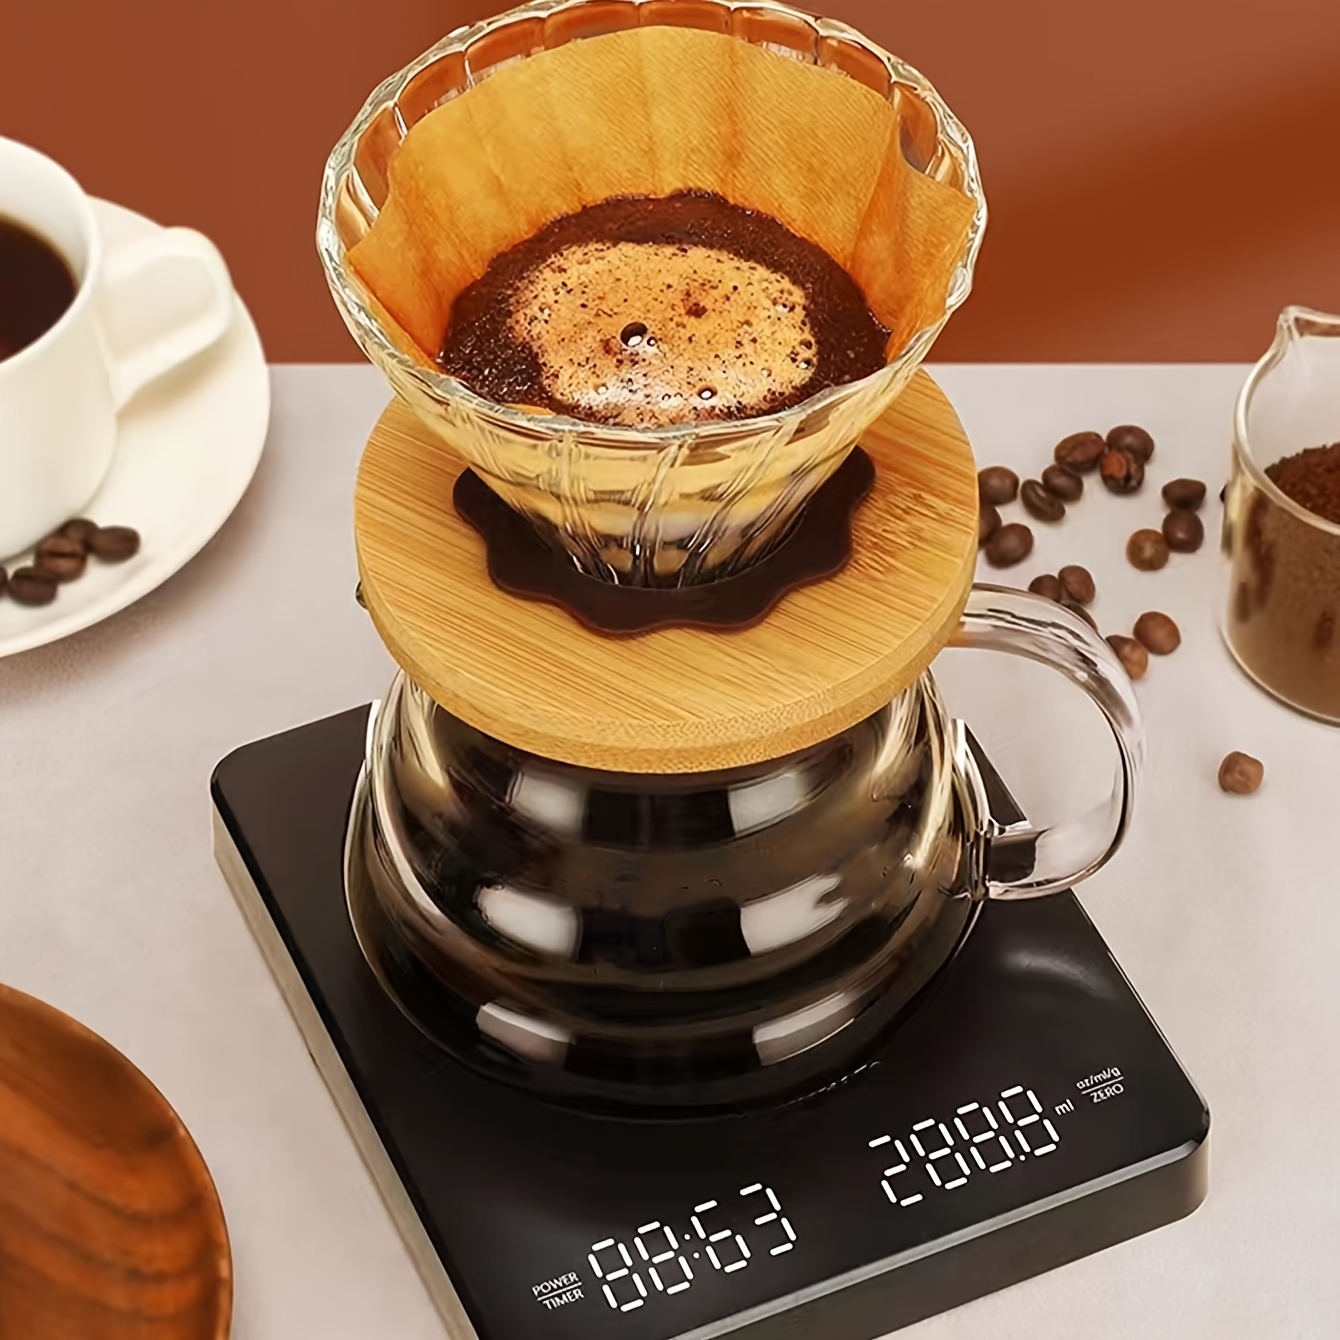 Digital Scale - Cottonwood Coffee